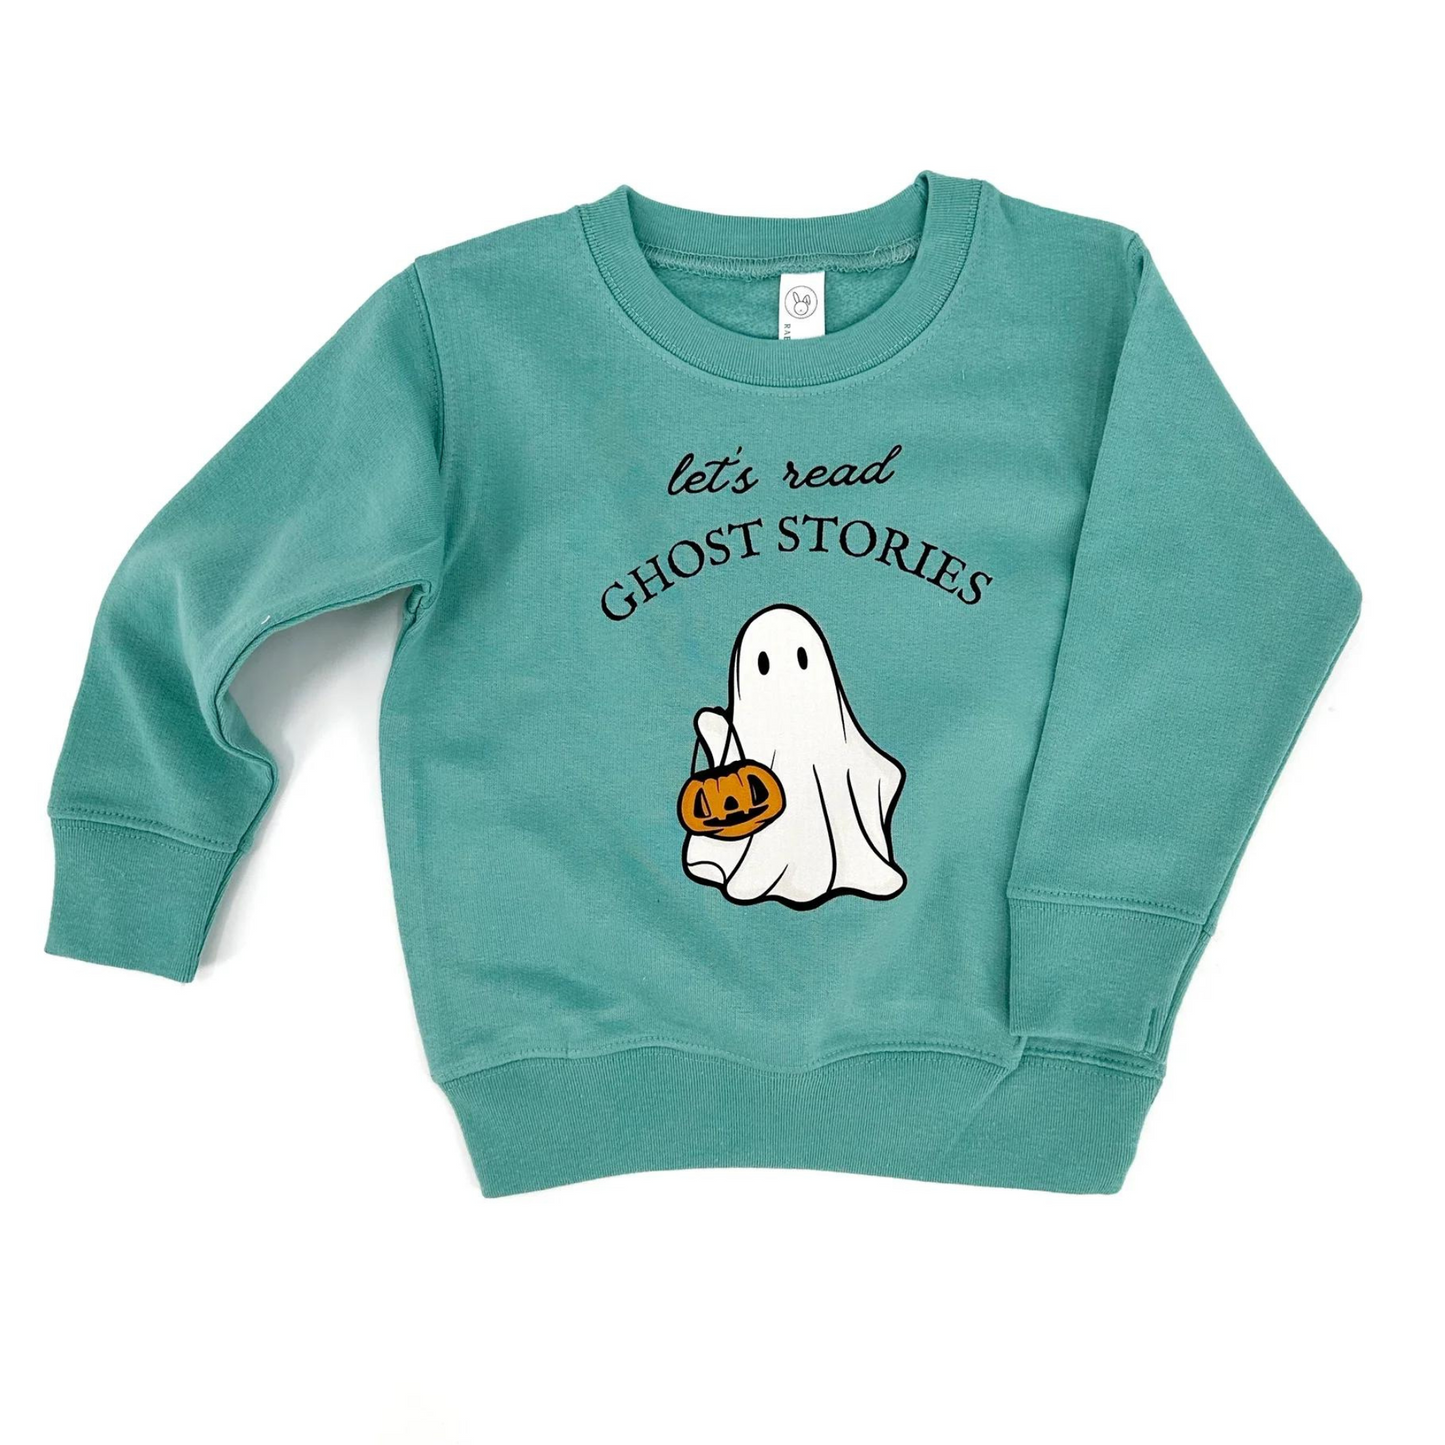 Let's Read Ghost Stories Kids Sweatshirt, Green